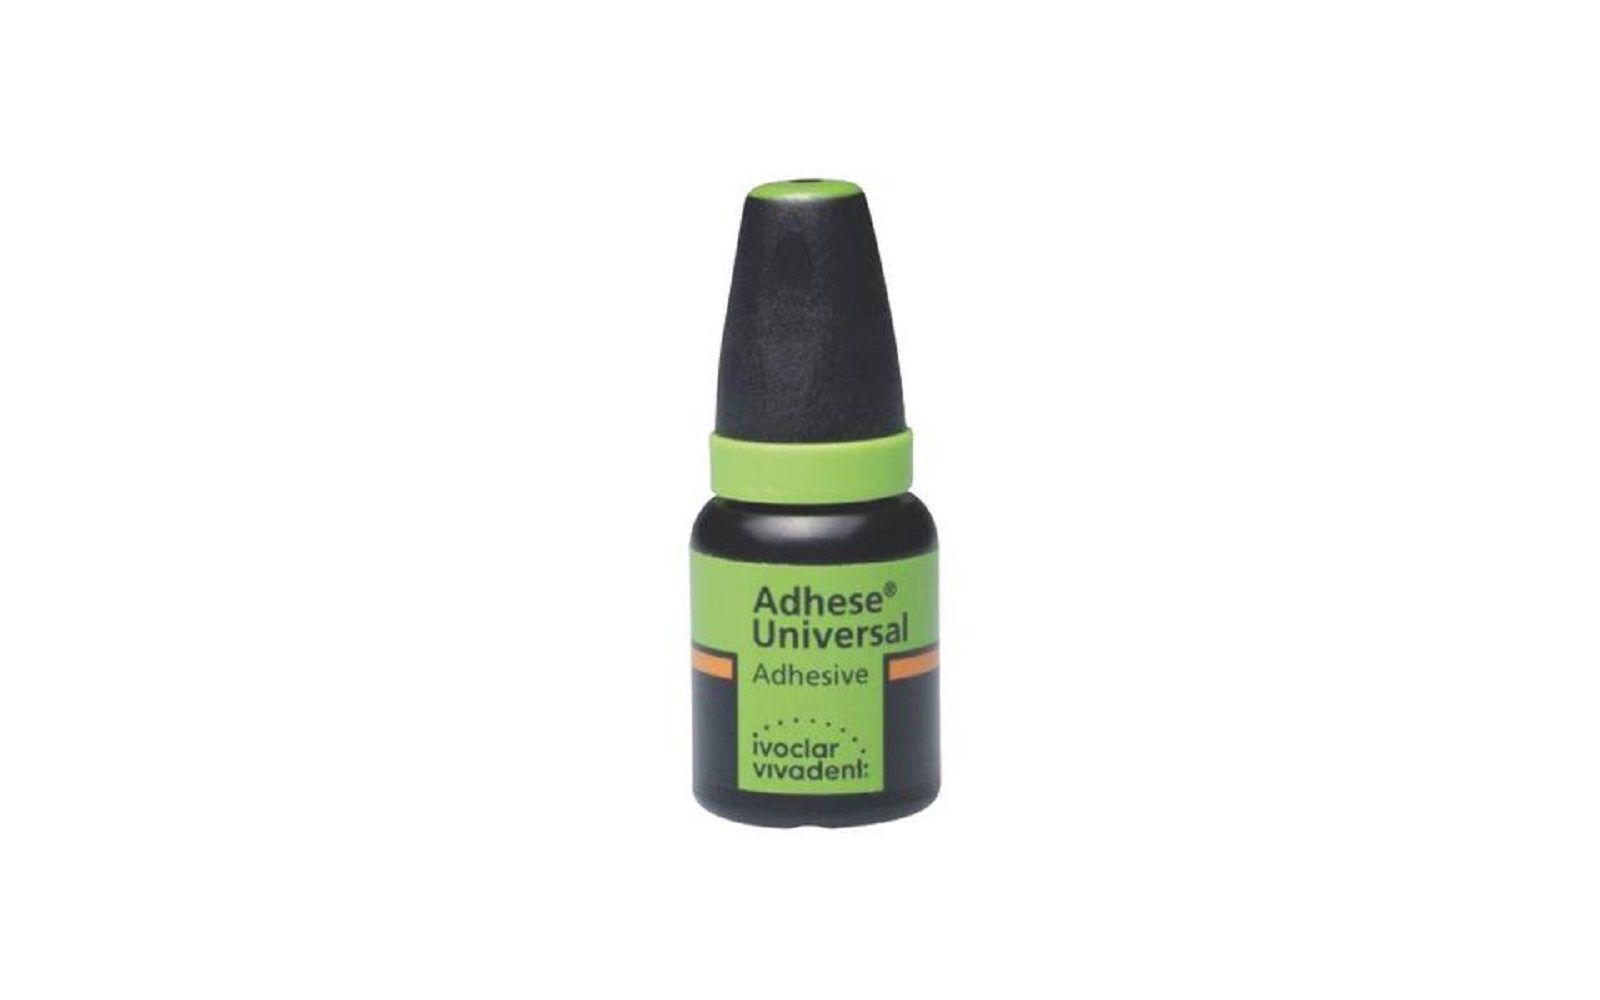 Adhese® universal bottle - ivoclar